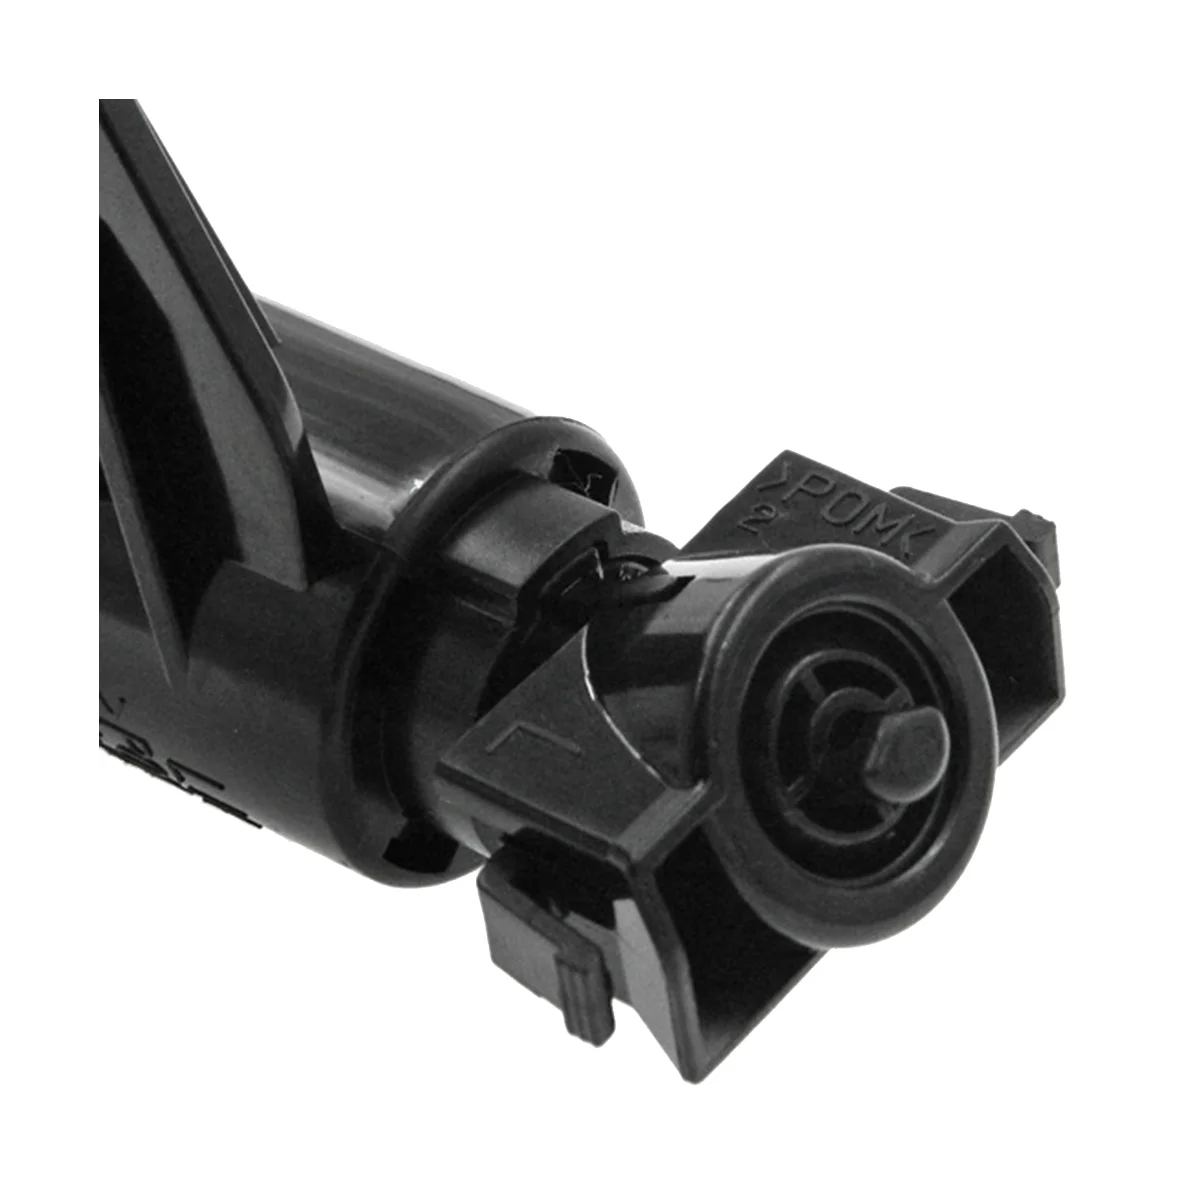 

98671-F1000 Left Front Headlight Washer Nozzle for KIA Sportage KX5 2016-2018 Car Water Spray Jet Telescopic